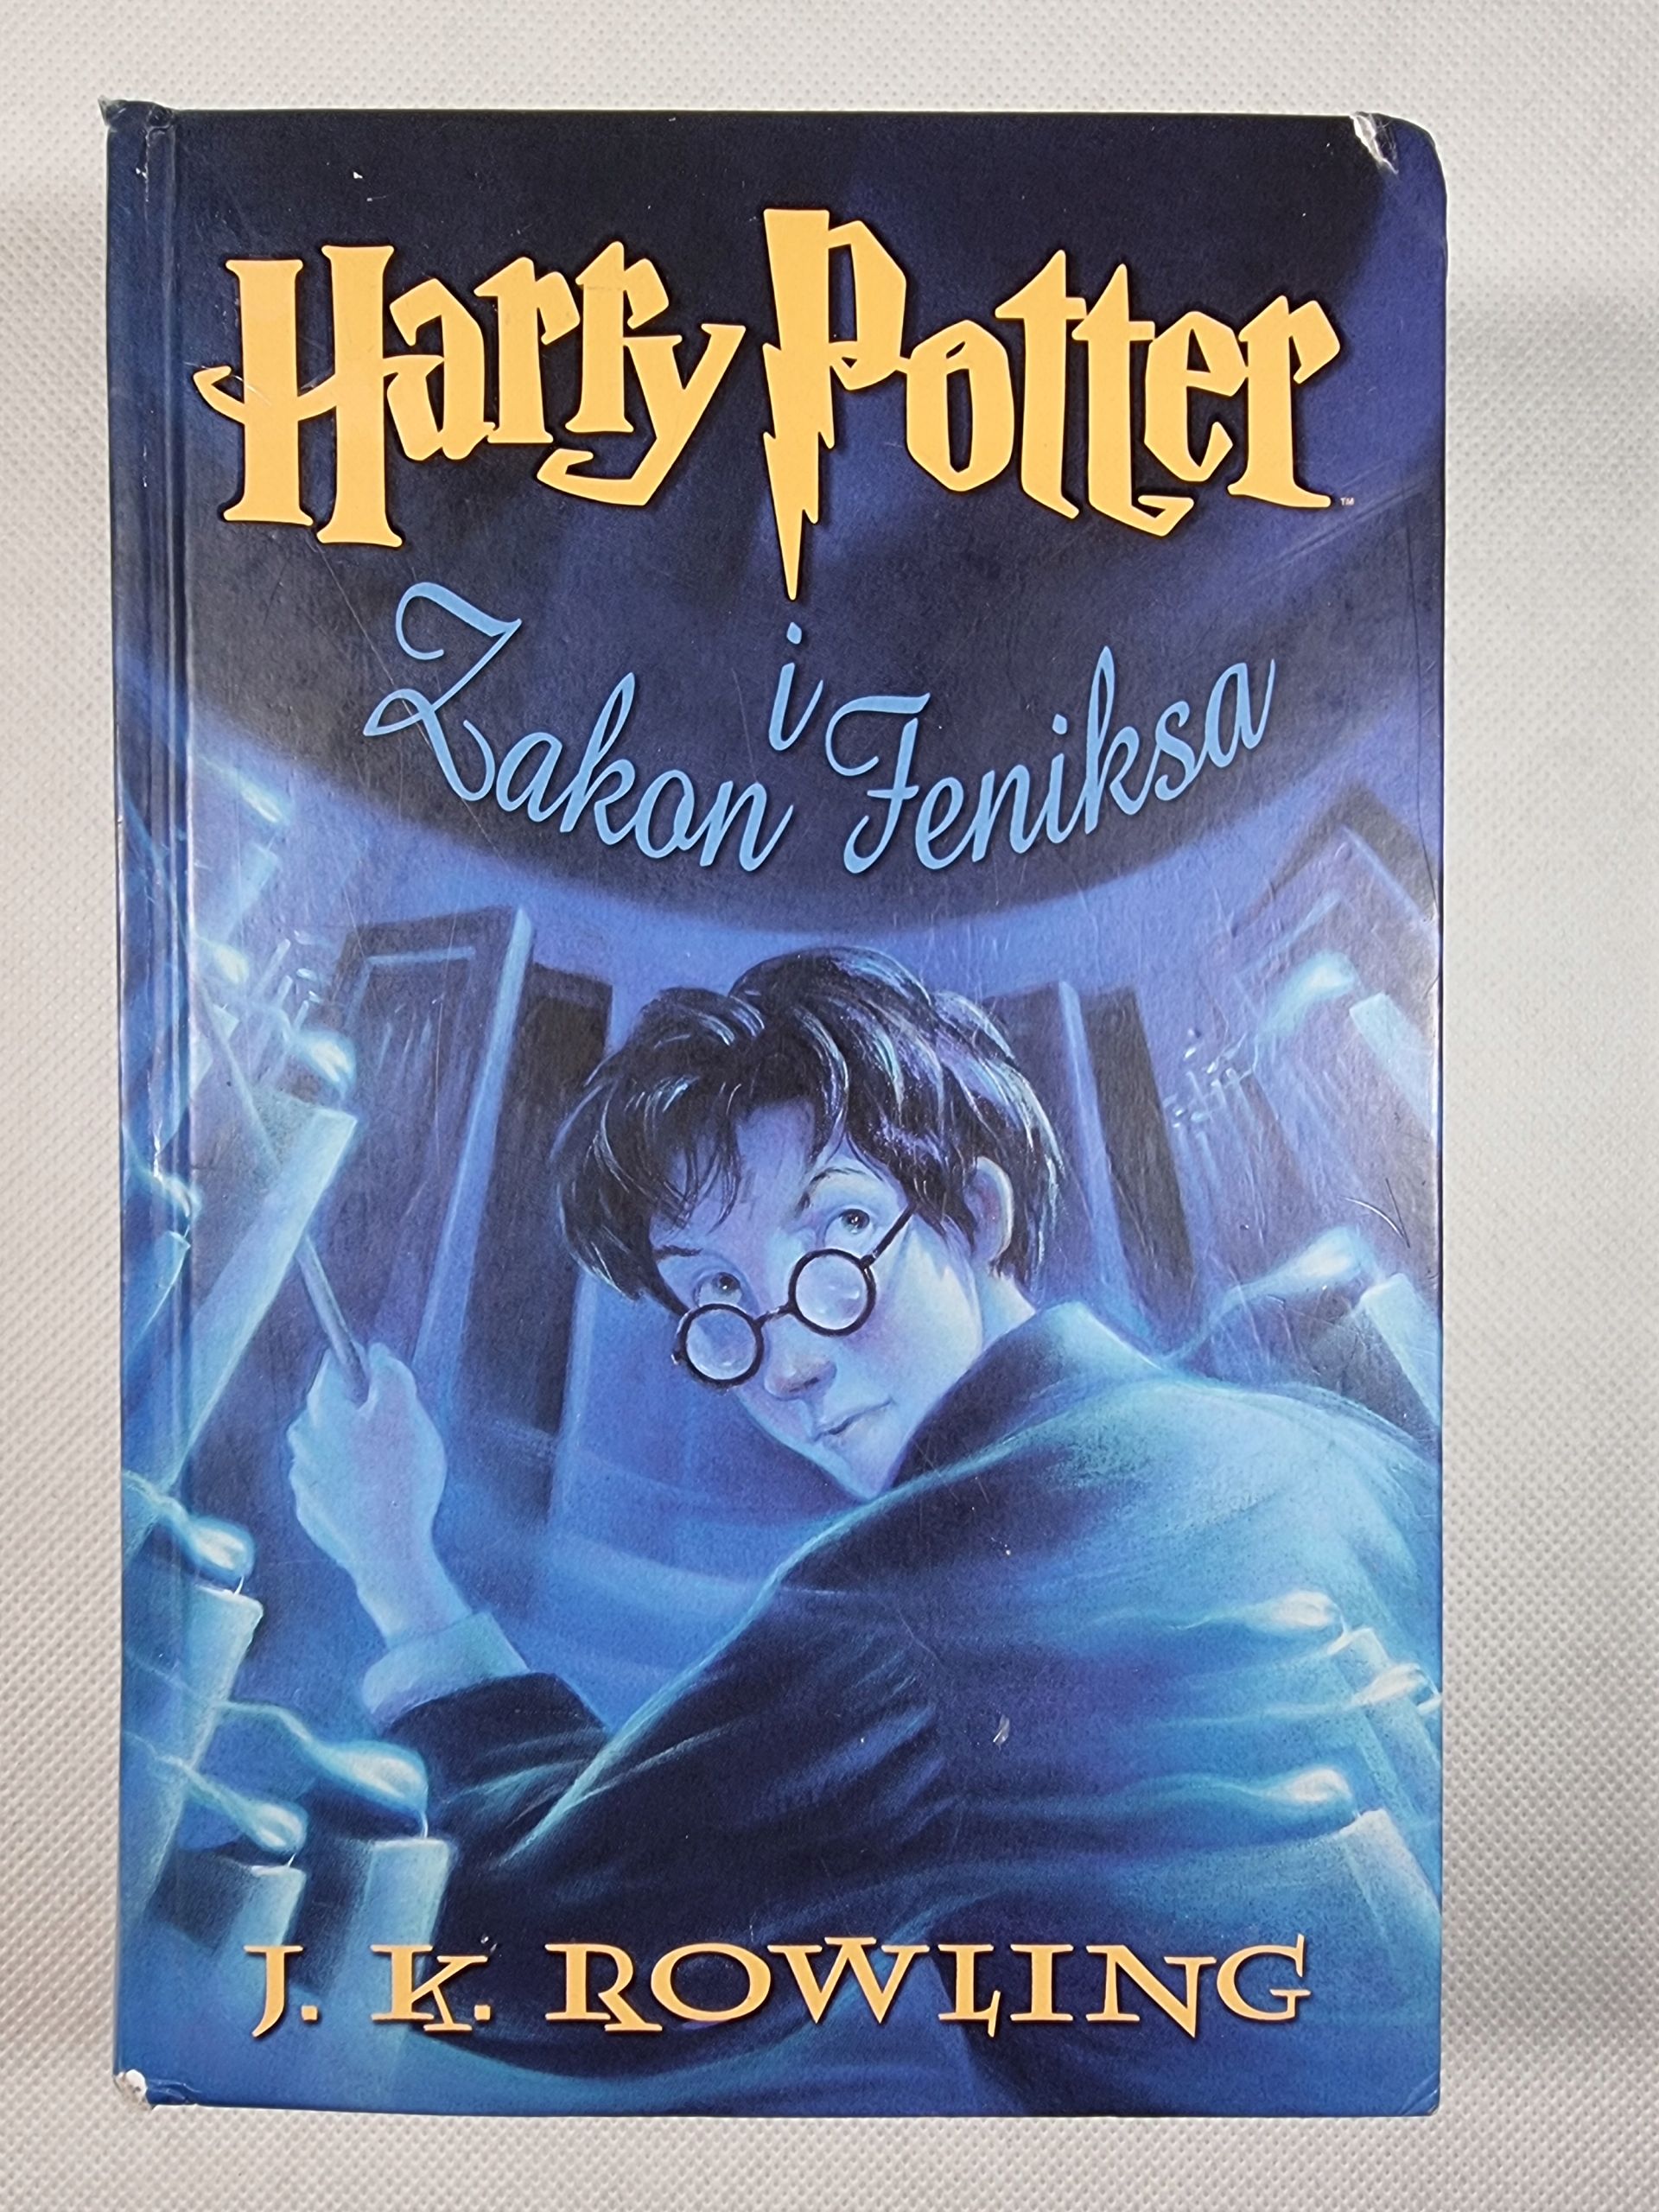 TWARDA / Harry Potter i Zakon Feniksa / J.K. Rowling